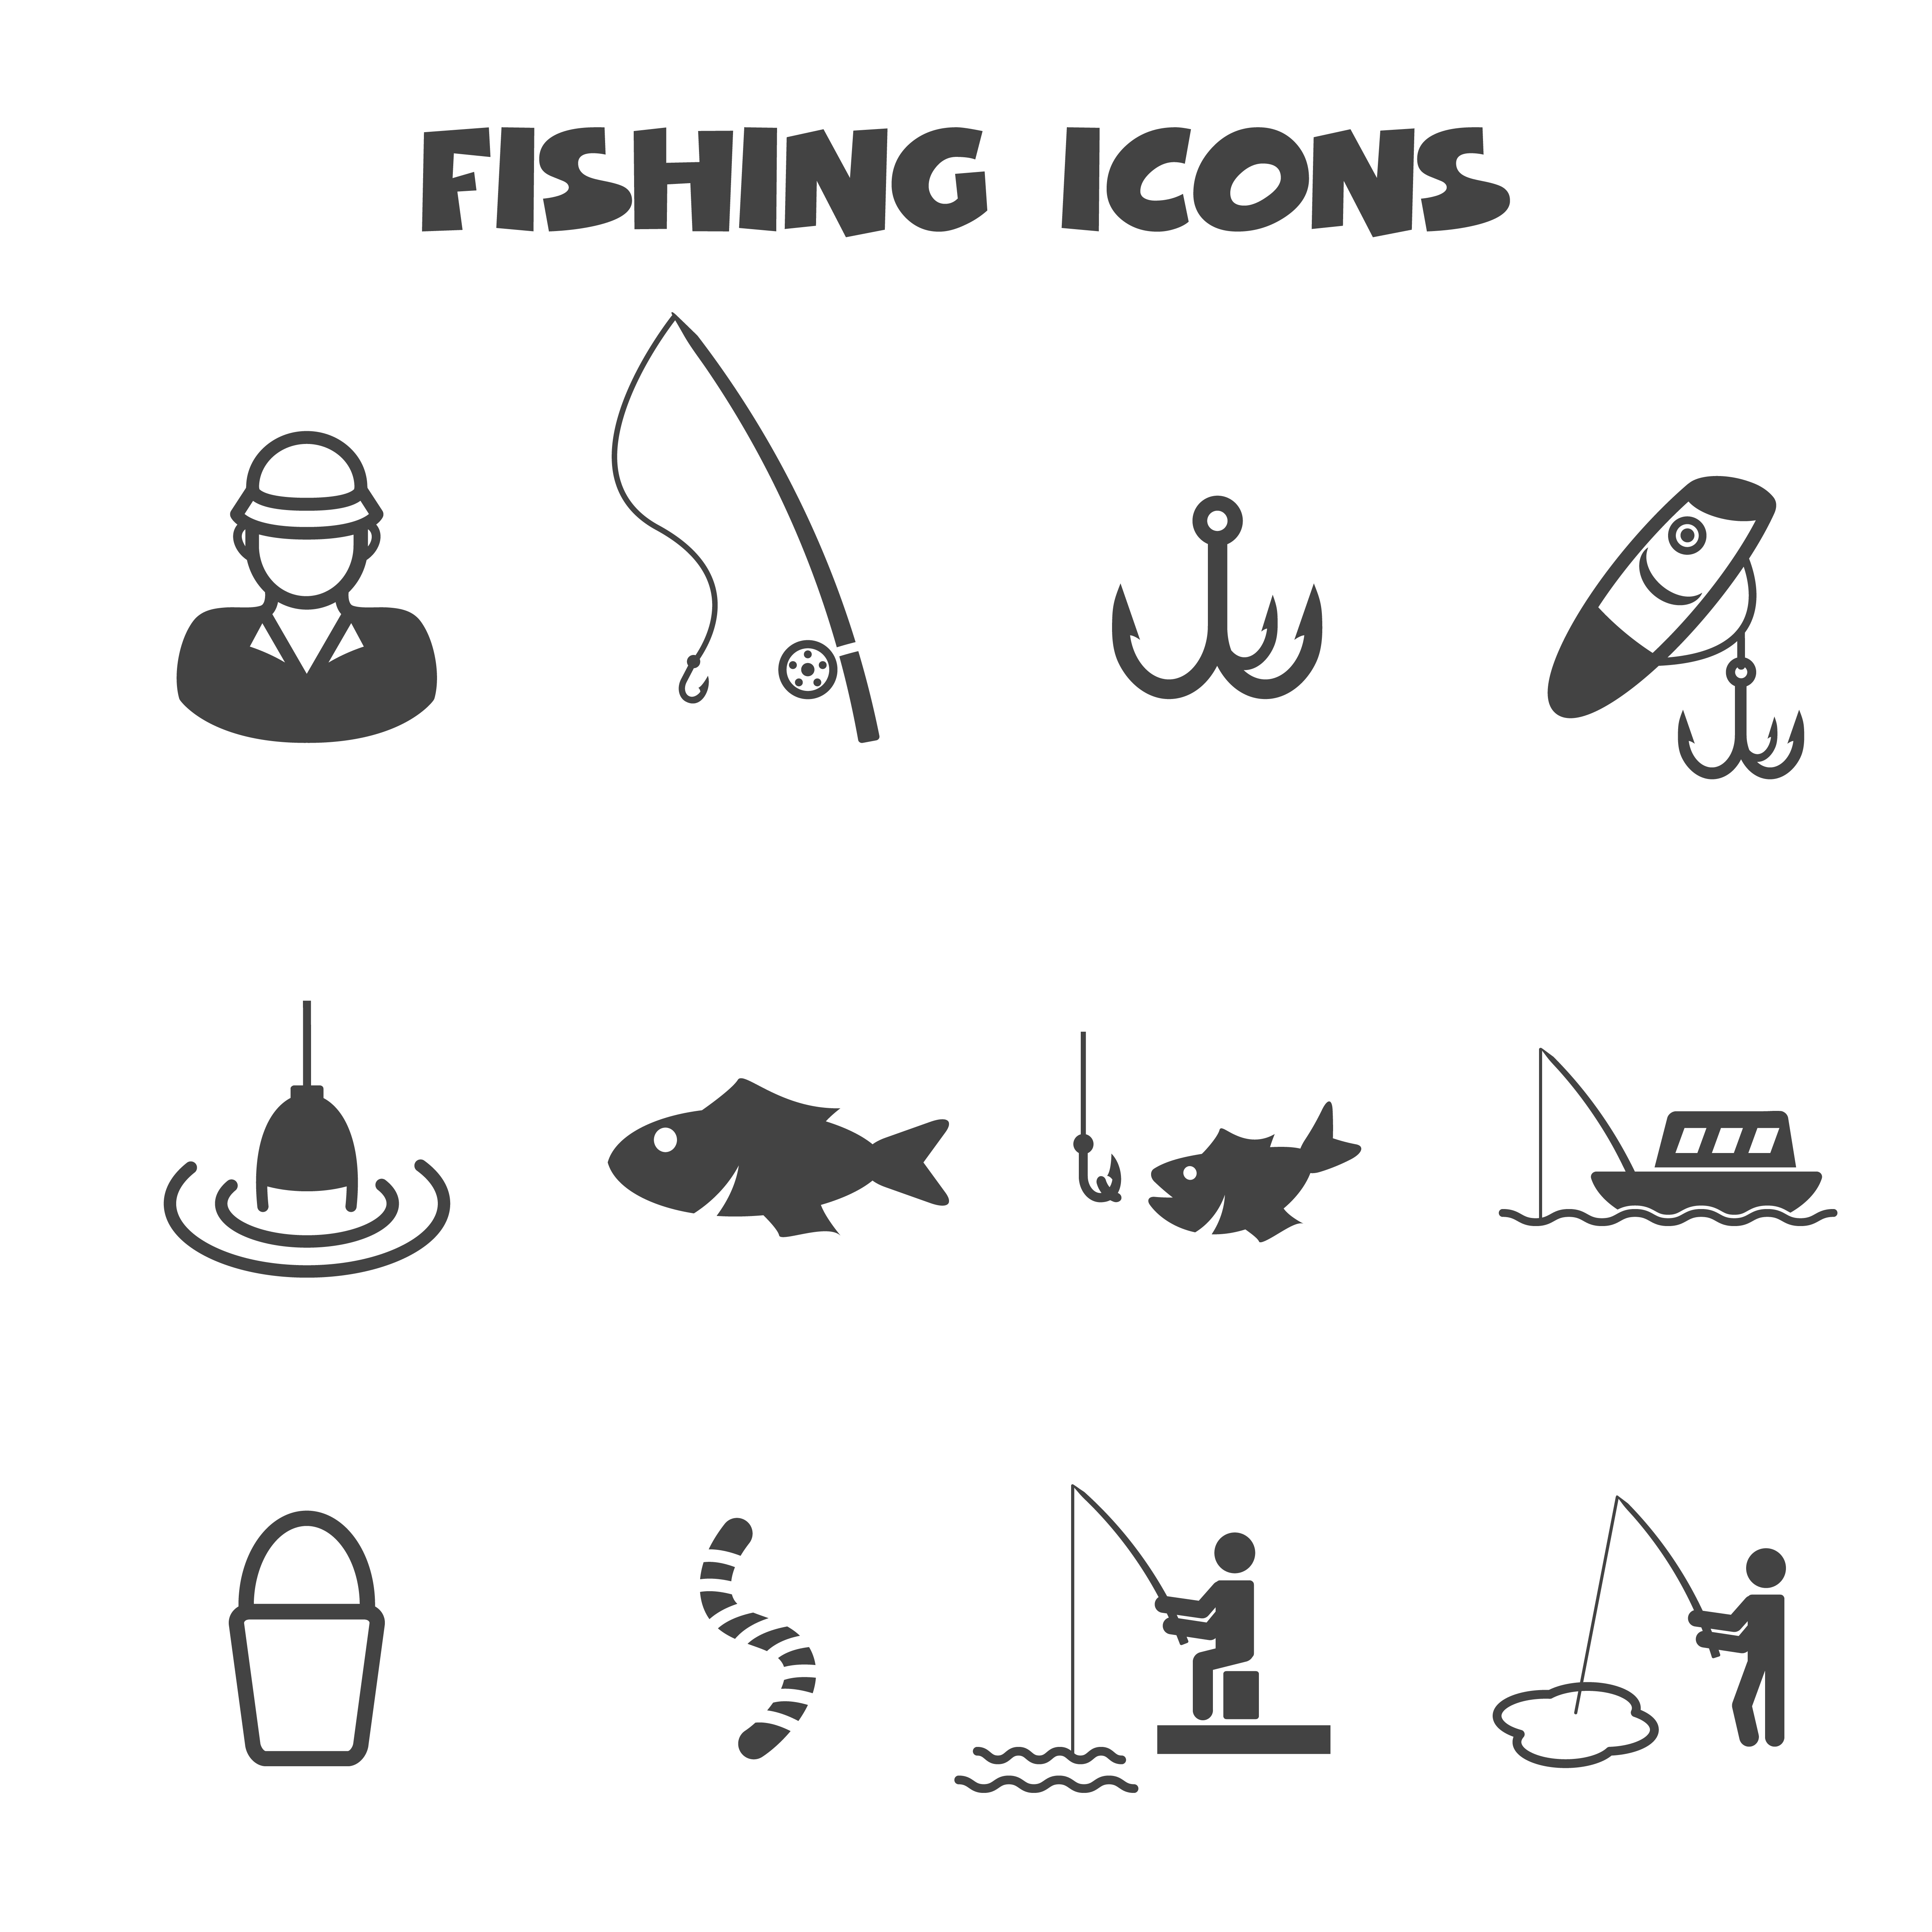 Download fishing icons symbol 633404 - Download Free Vectors ...